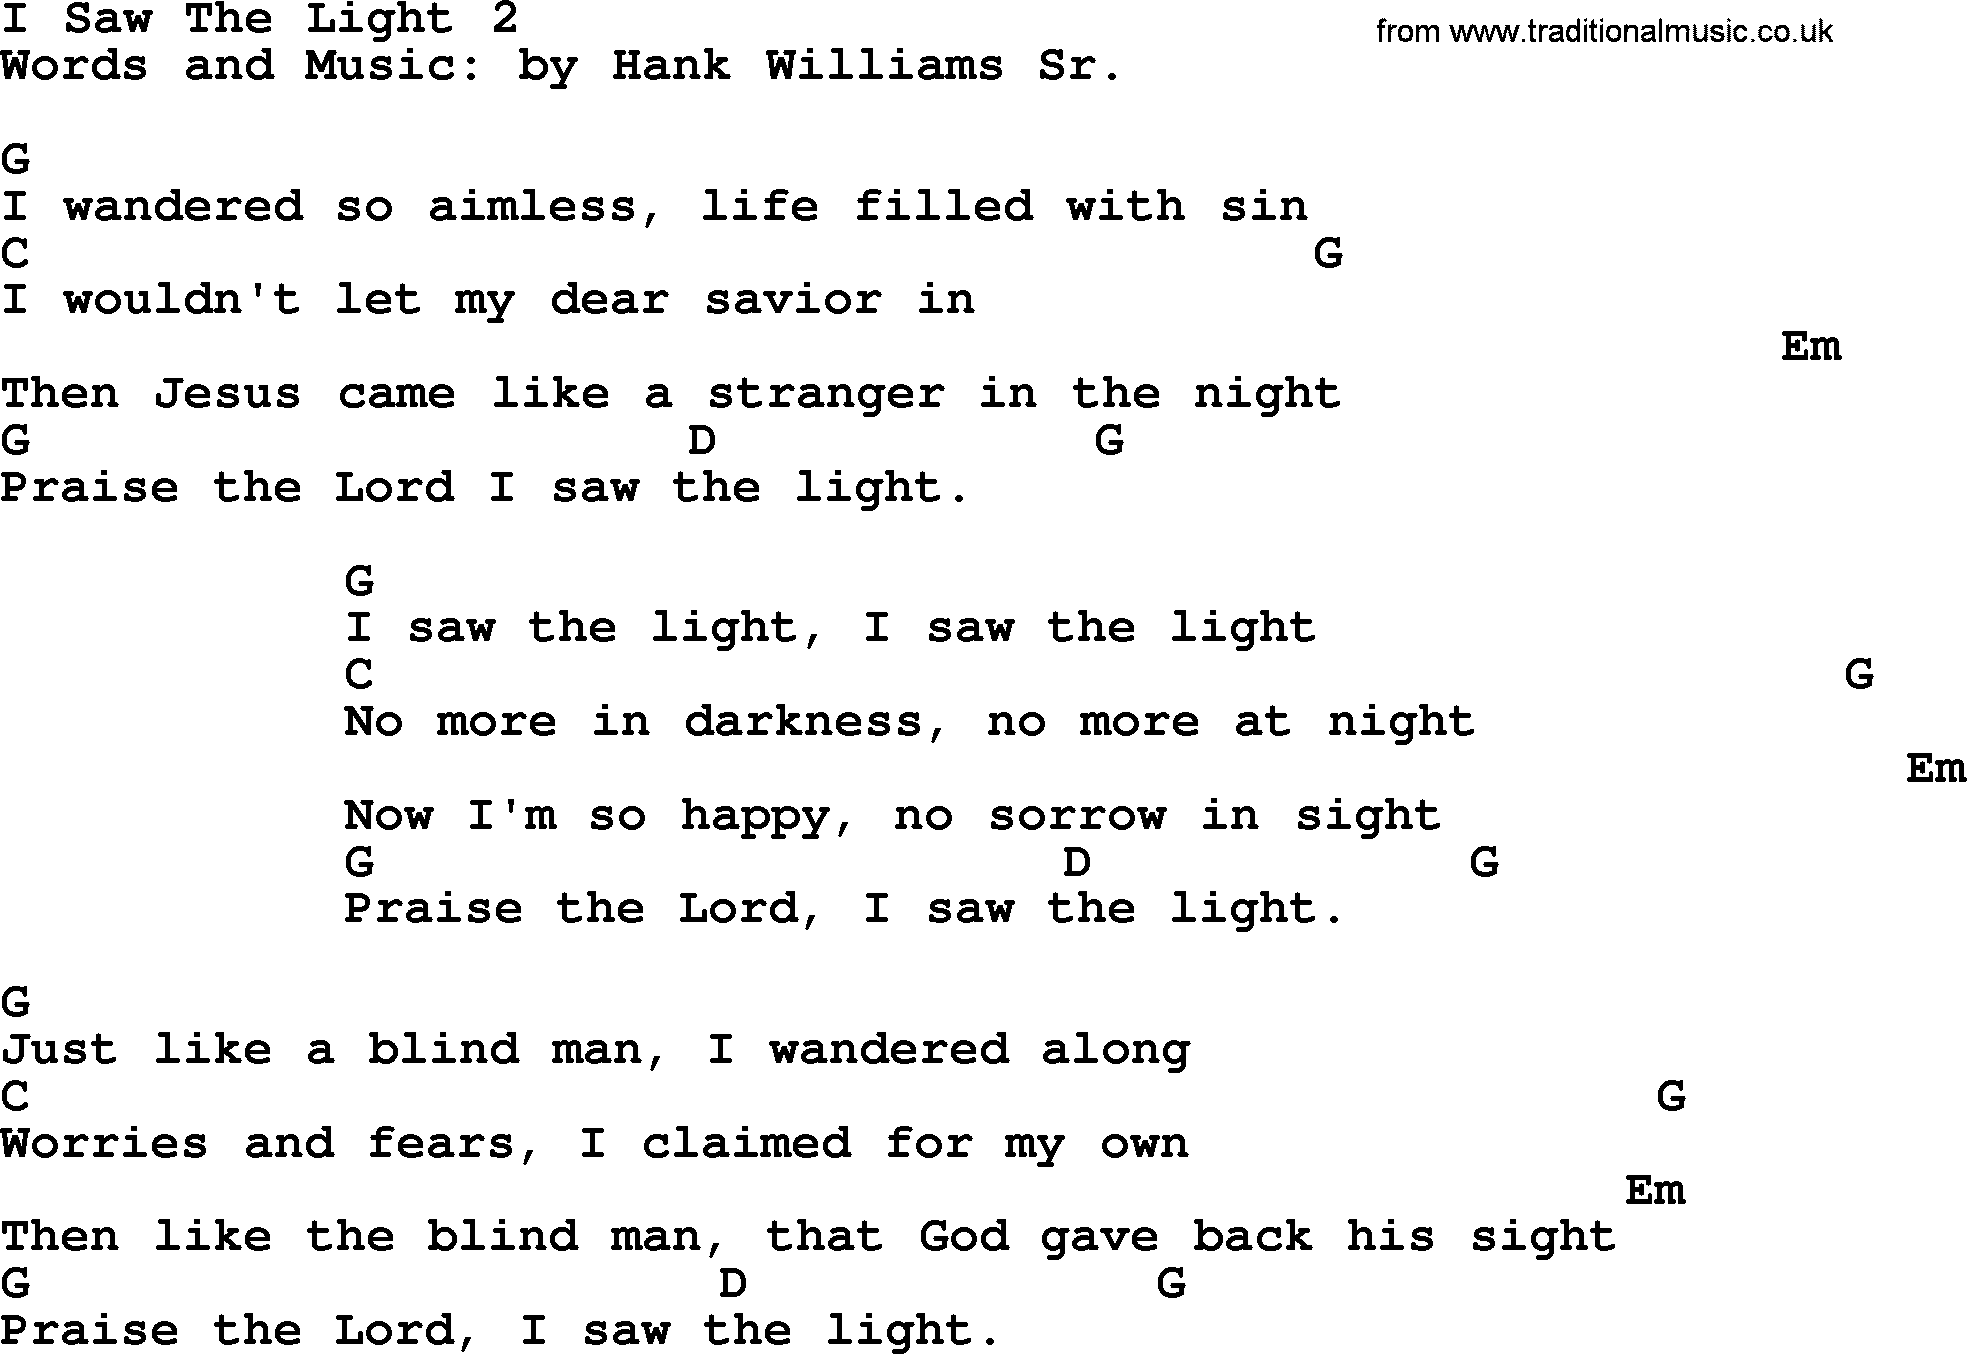 Hank Williams song I Saw The Light, lyrics and chords